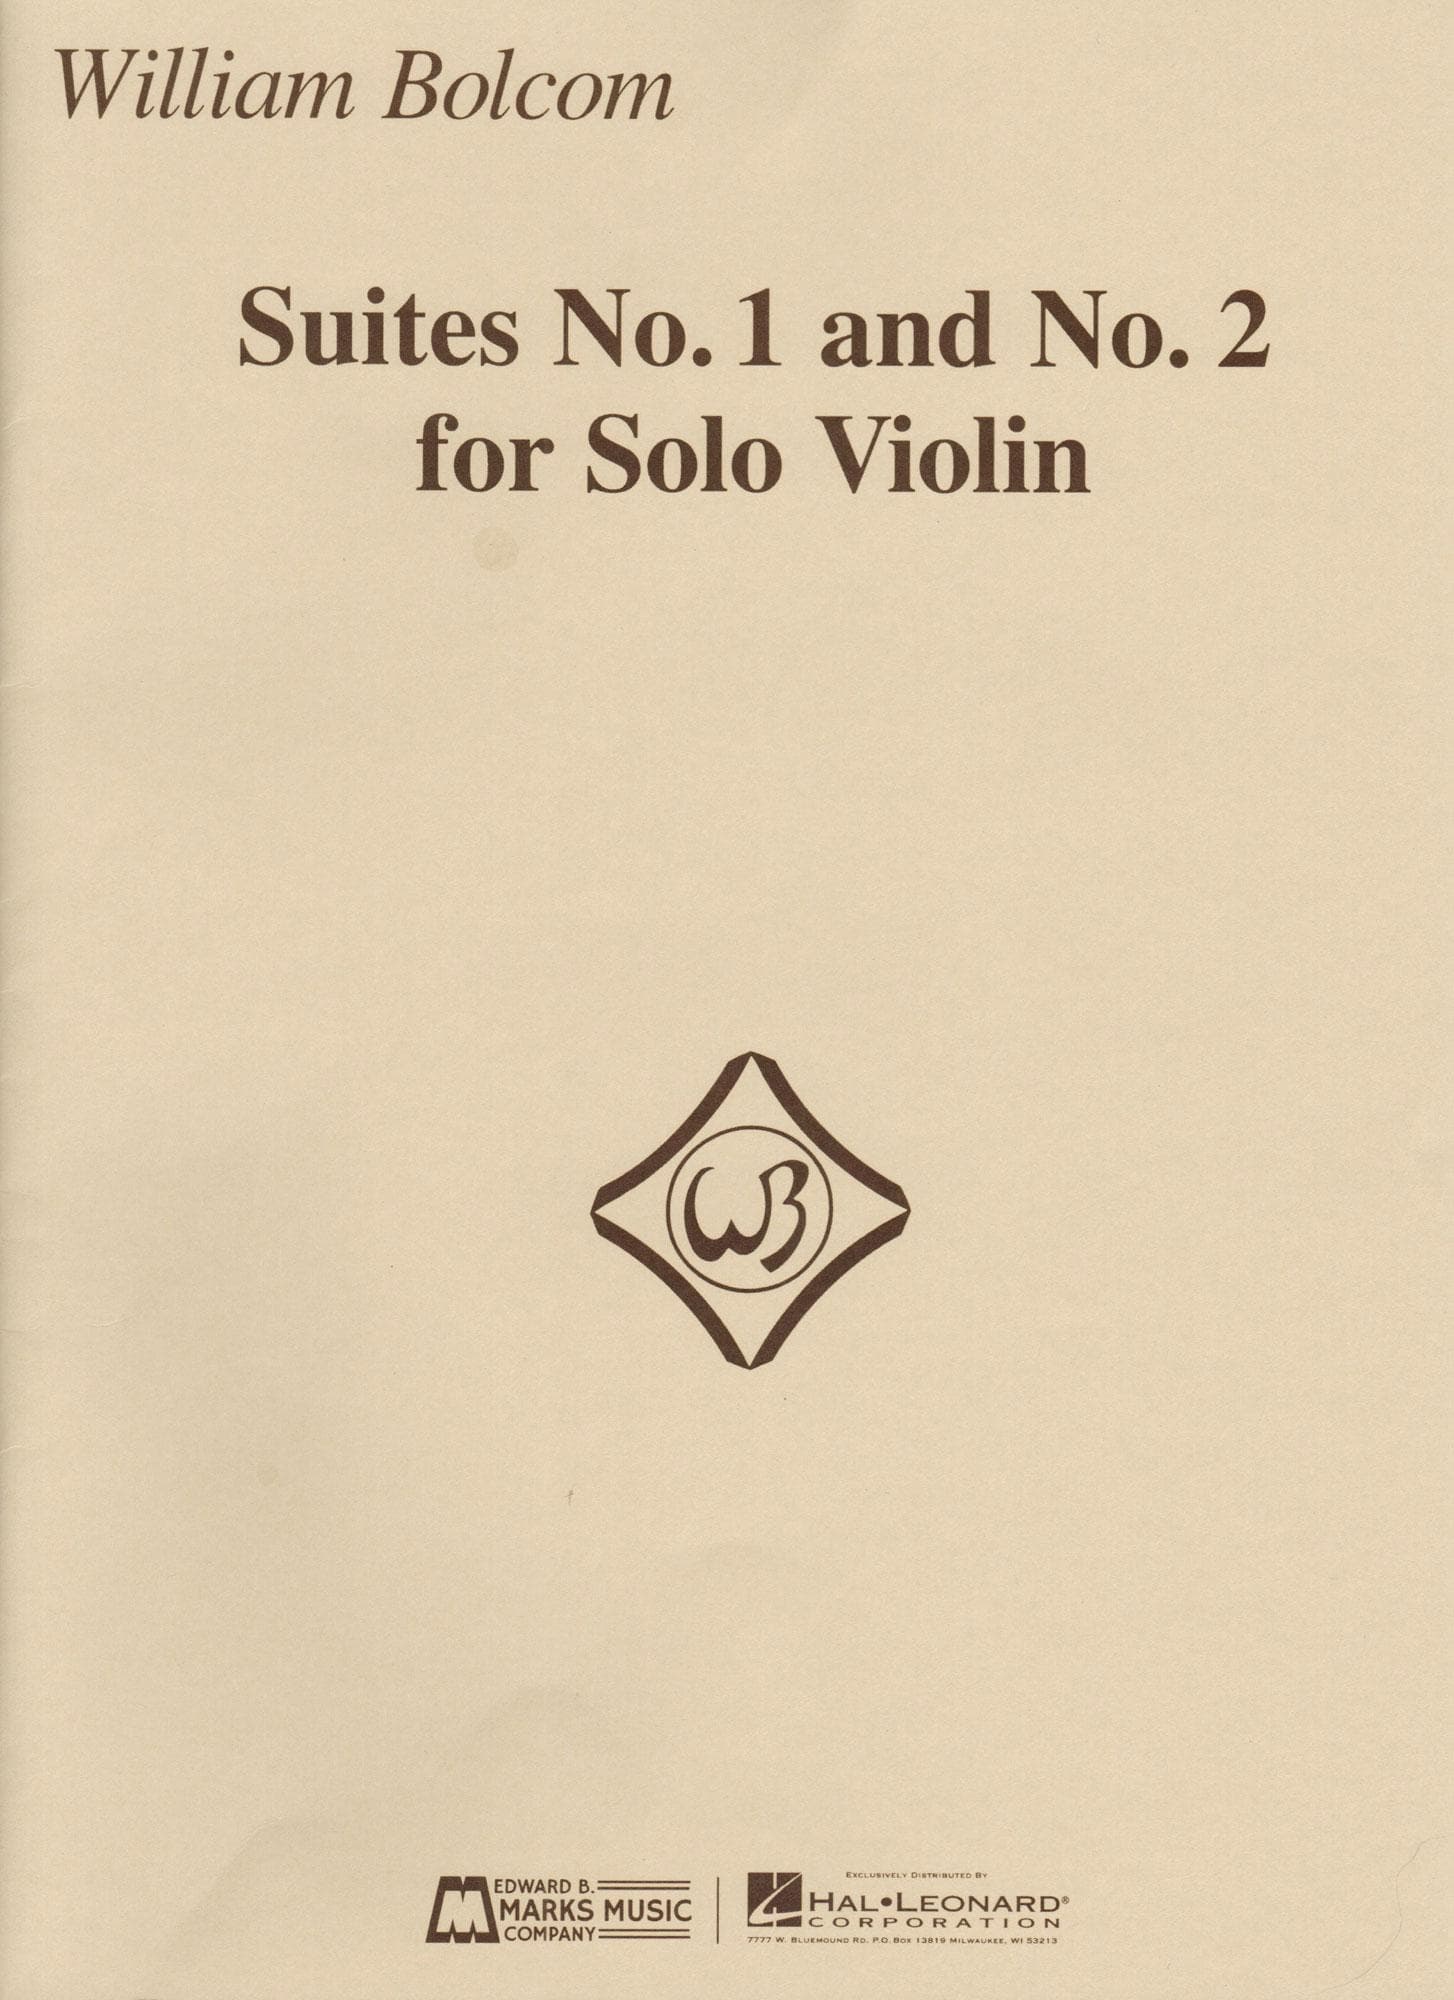 Bolcom, William - Suites No. 1 and No. 2 - for Solo Violin - Edward B. Marks Music Company